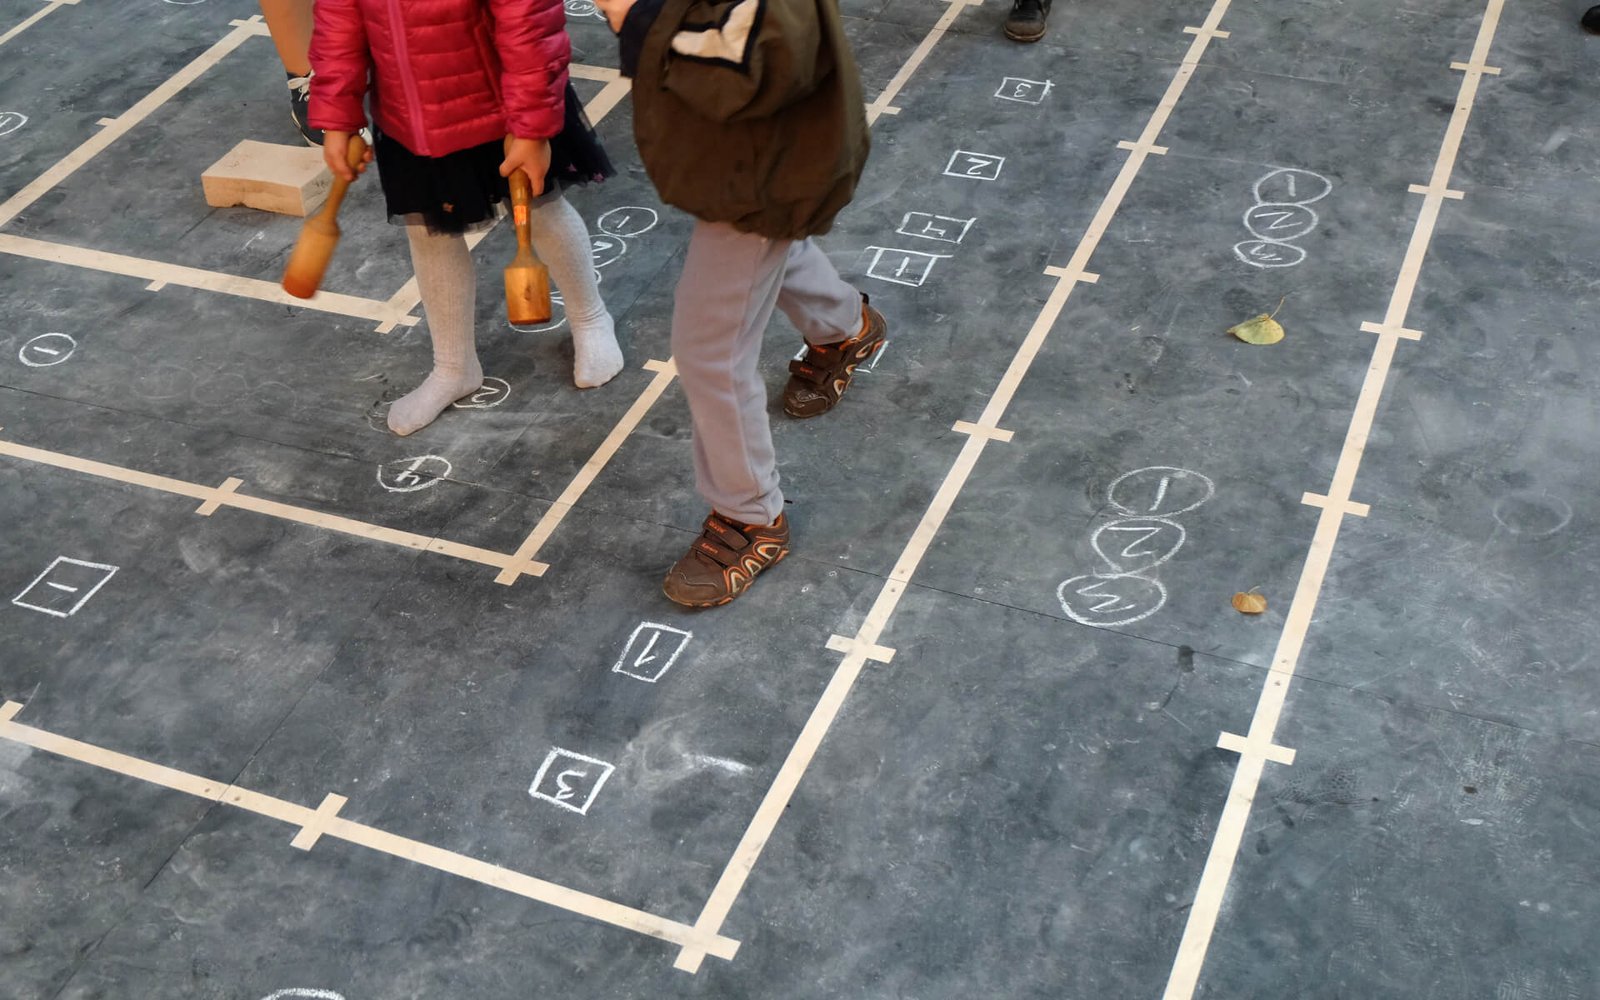 The legs 2 children holding kitchen utensils marching on a chalkboard score.